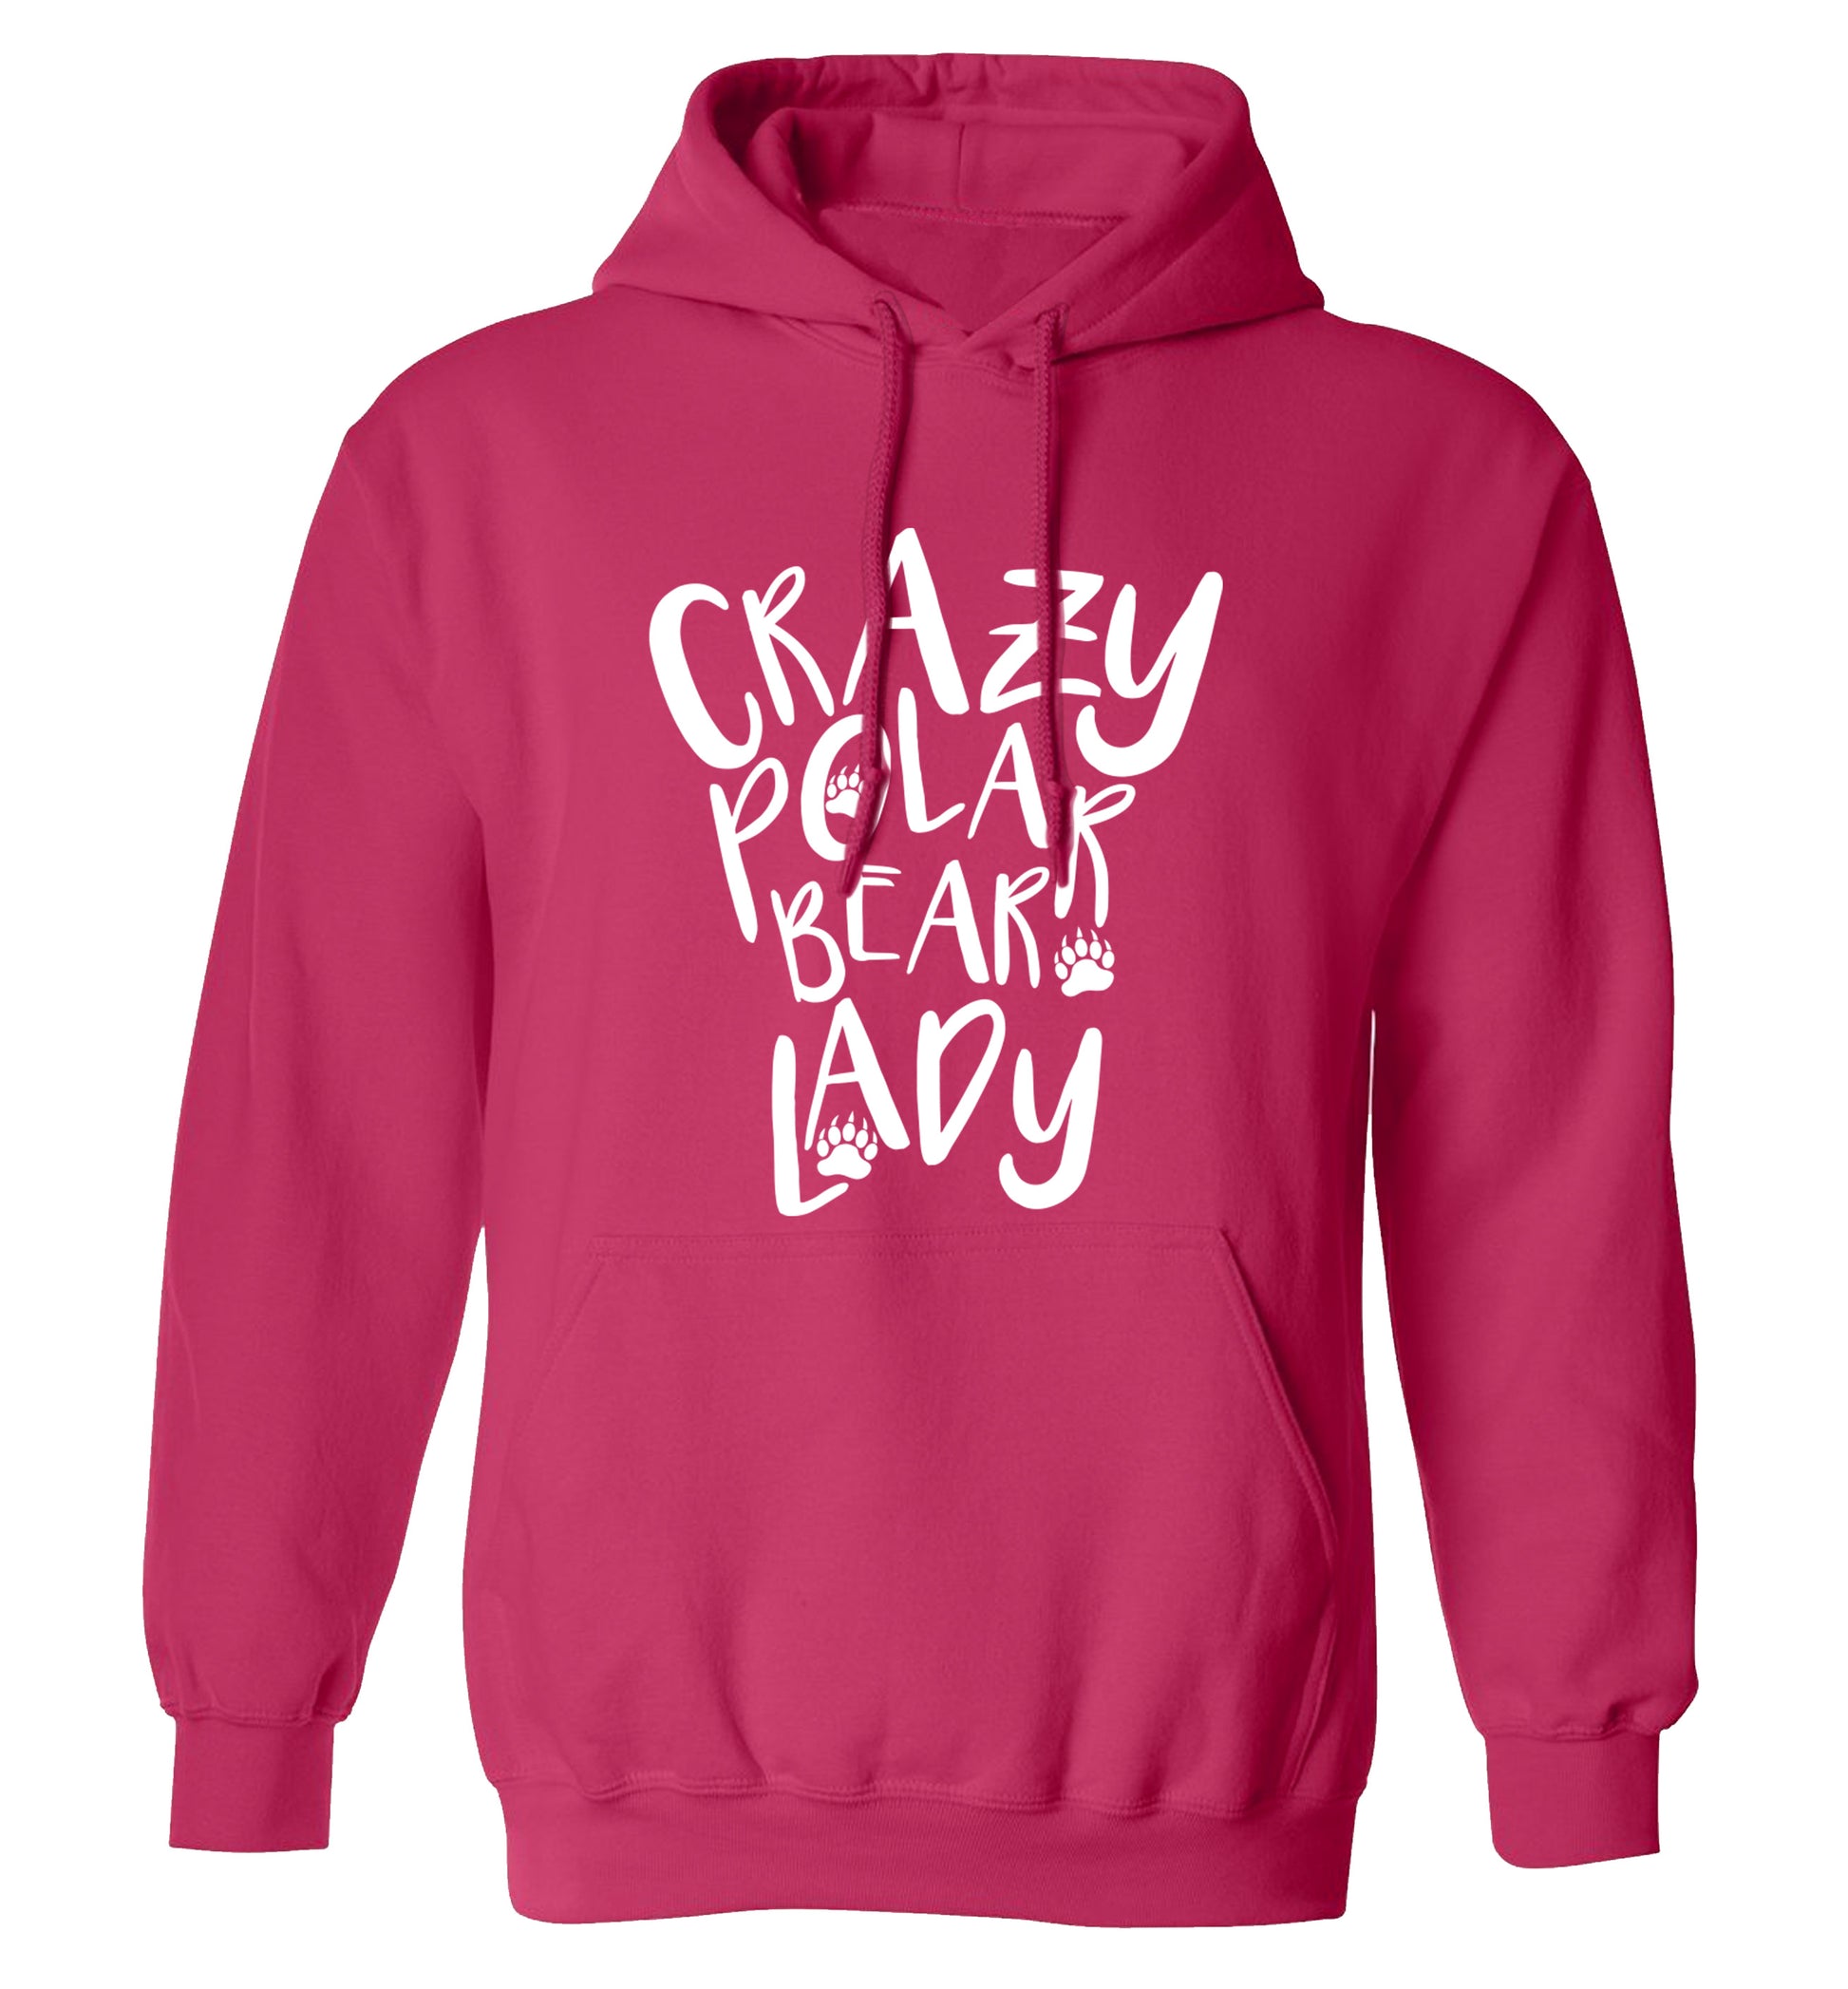 Crazy polar bear lady adults unisex pink hoodie 2XL